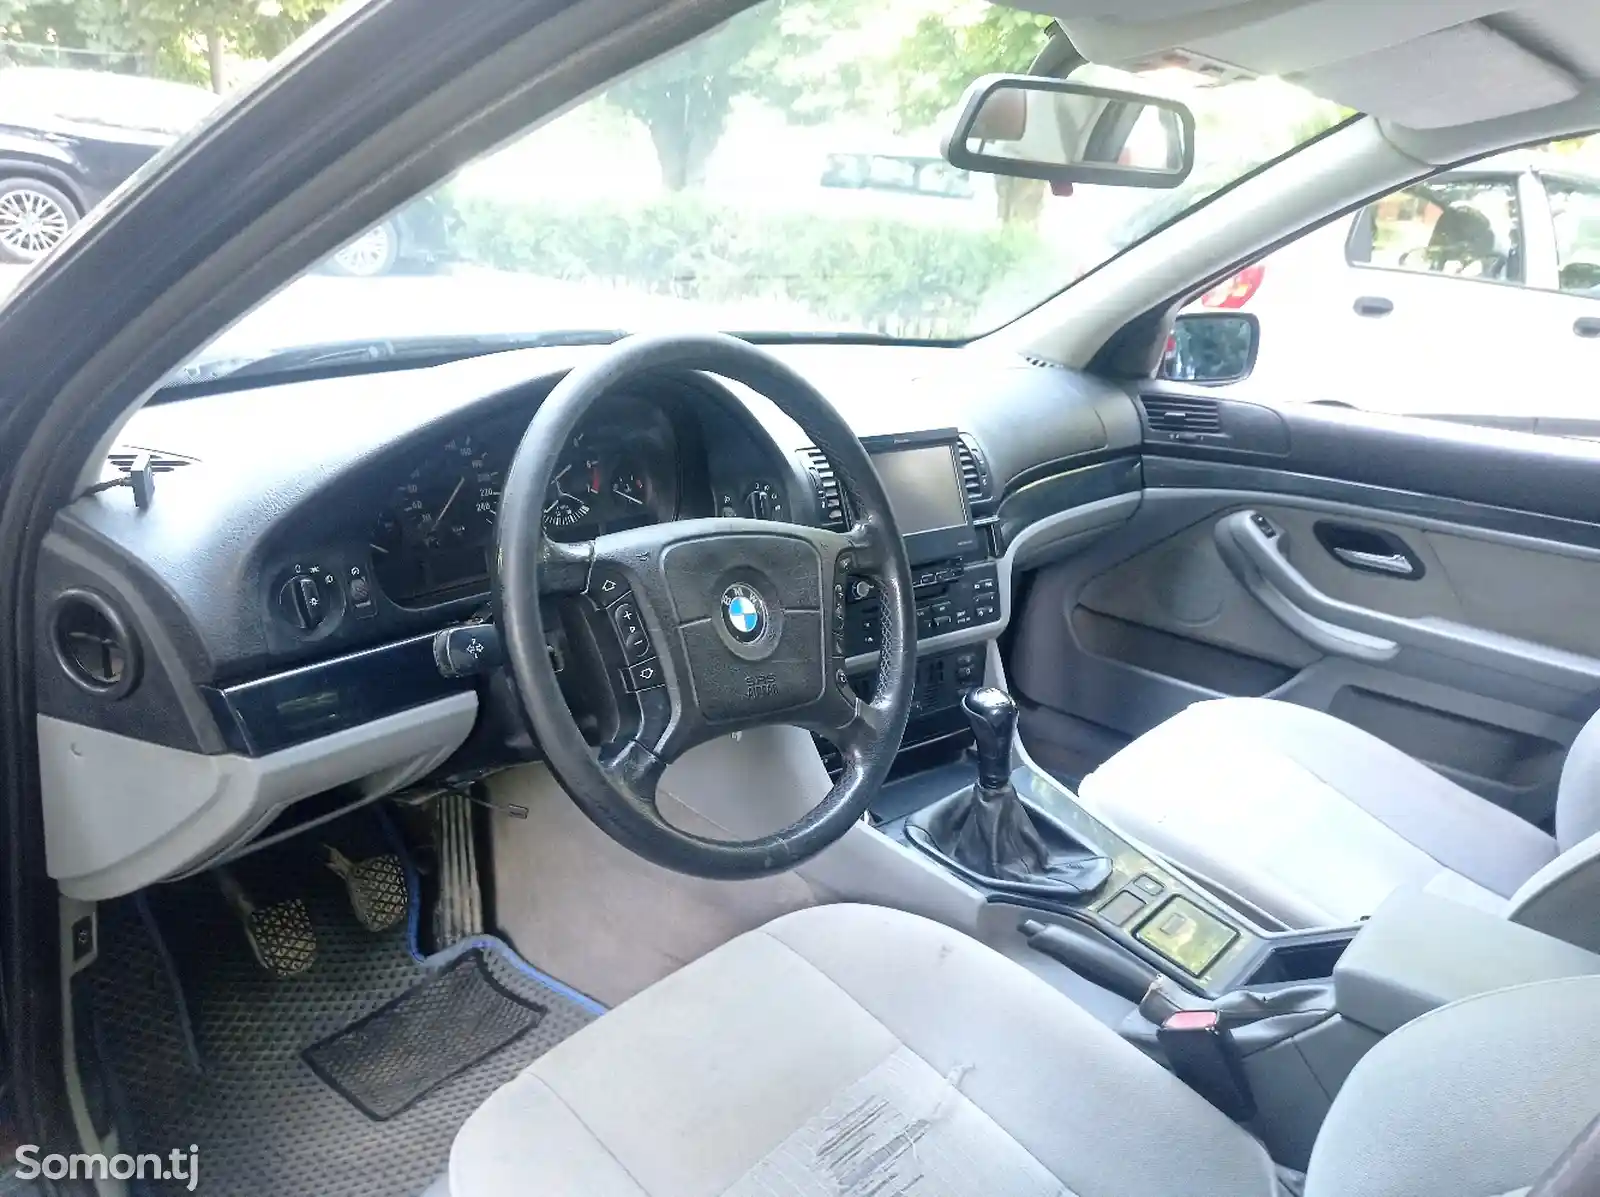 BMW 5 series, 1997-6